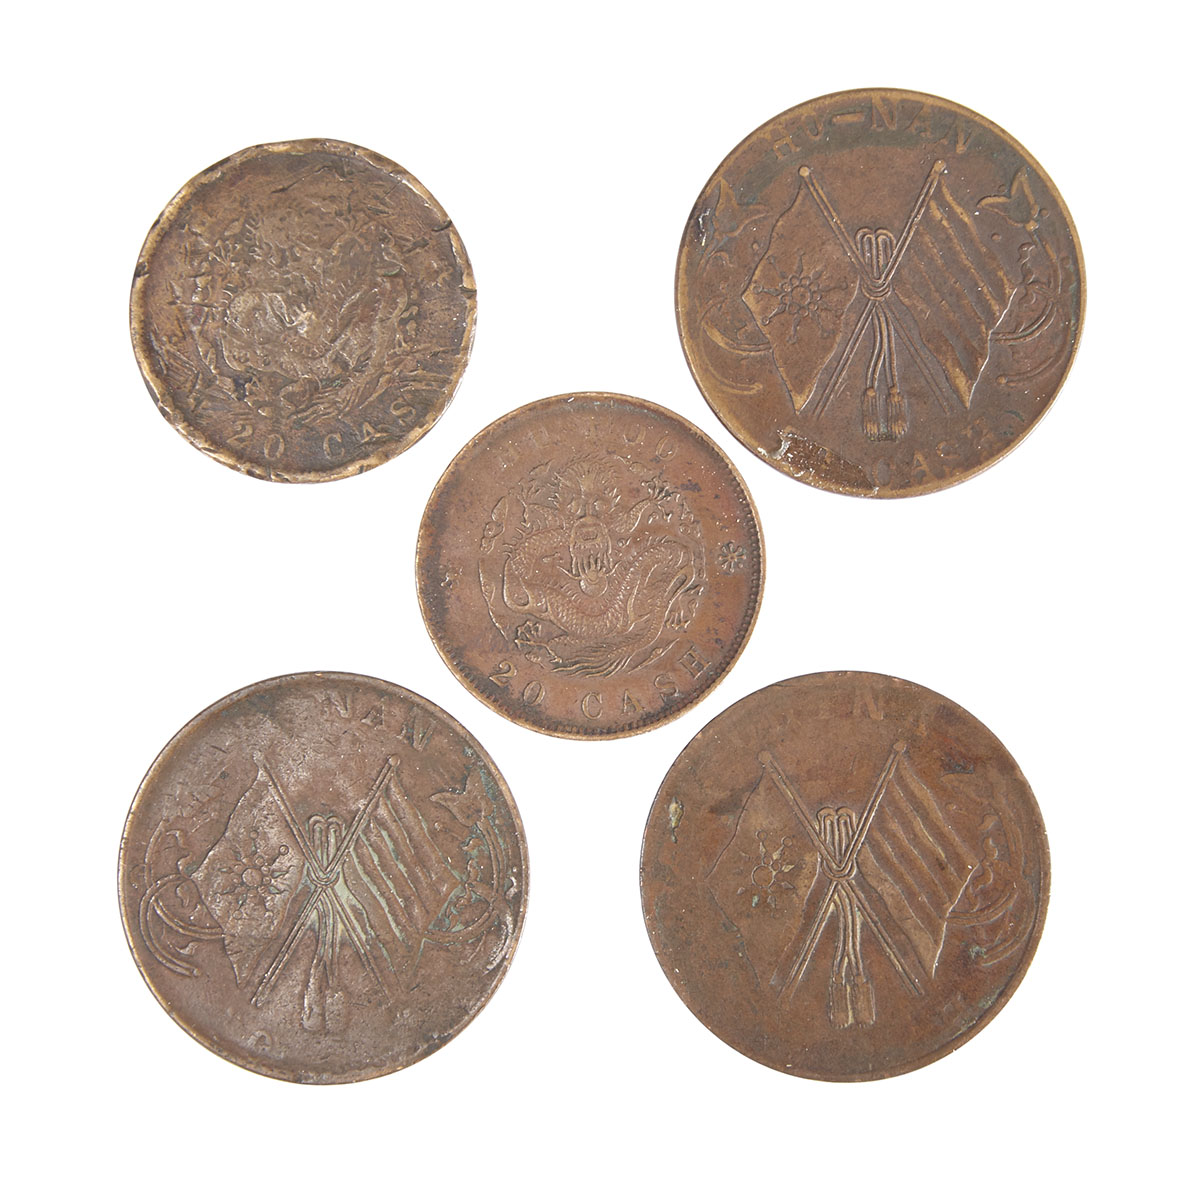 Two Guangxu and Three Republic Period Copper Coins